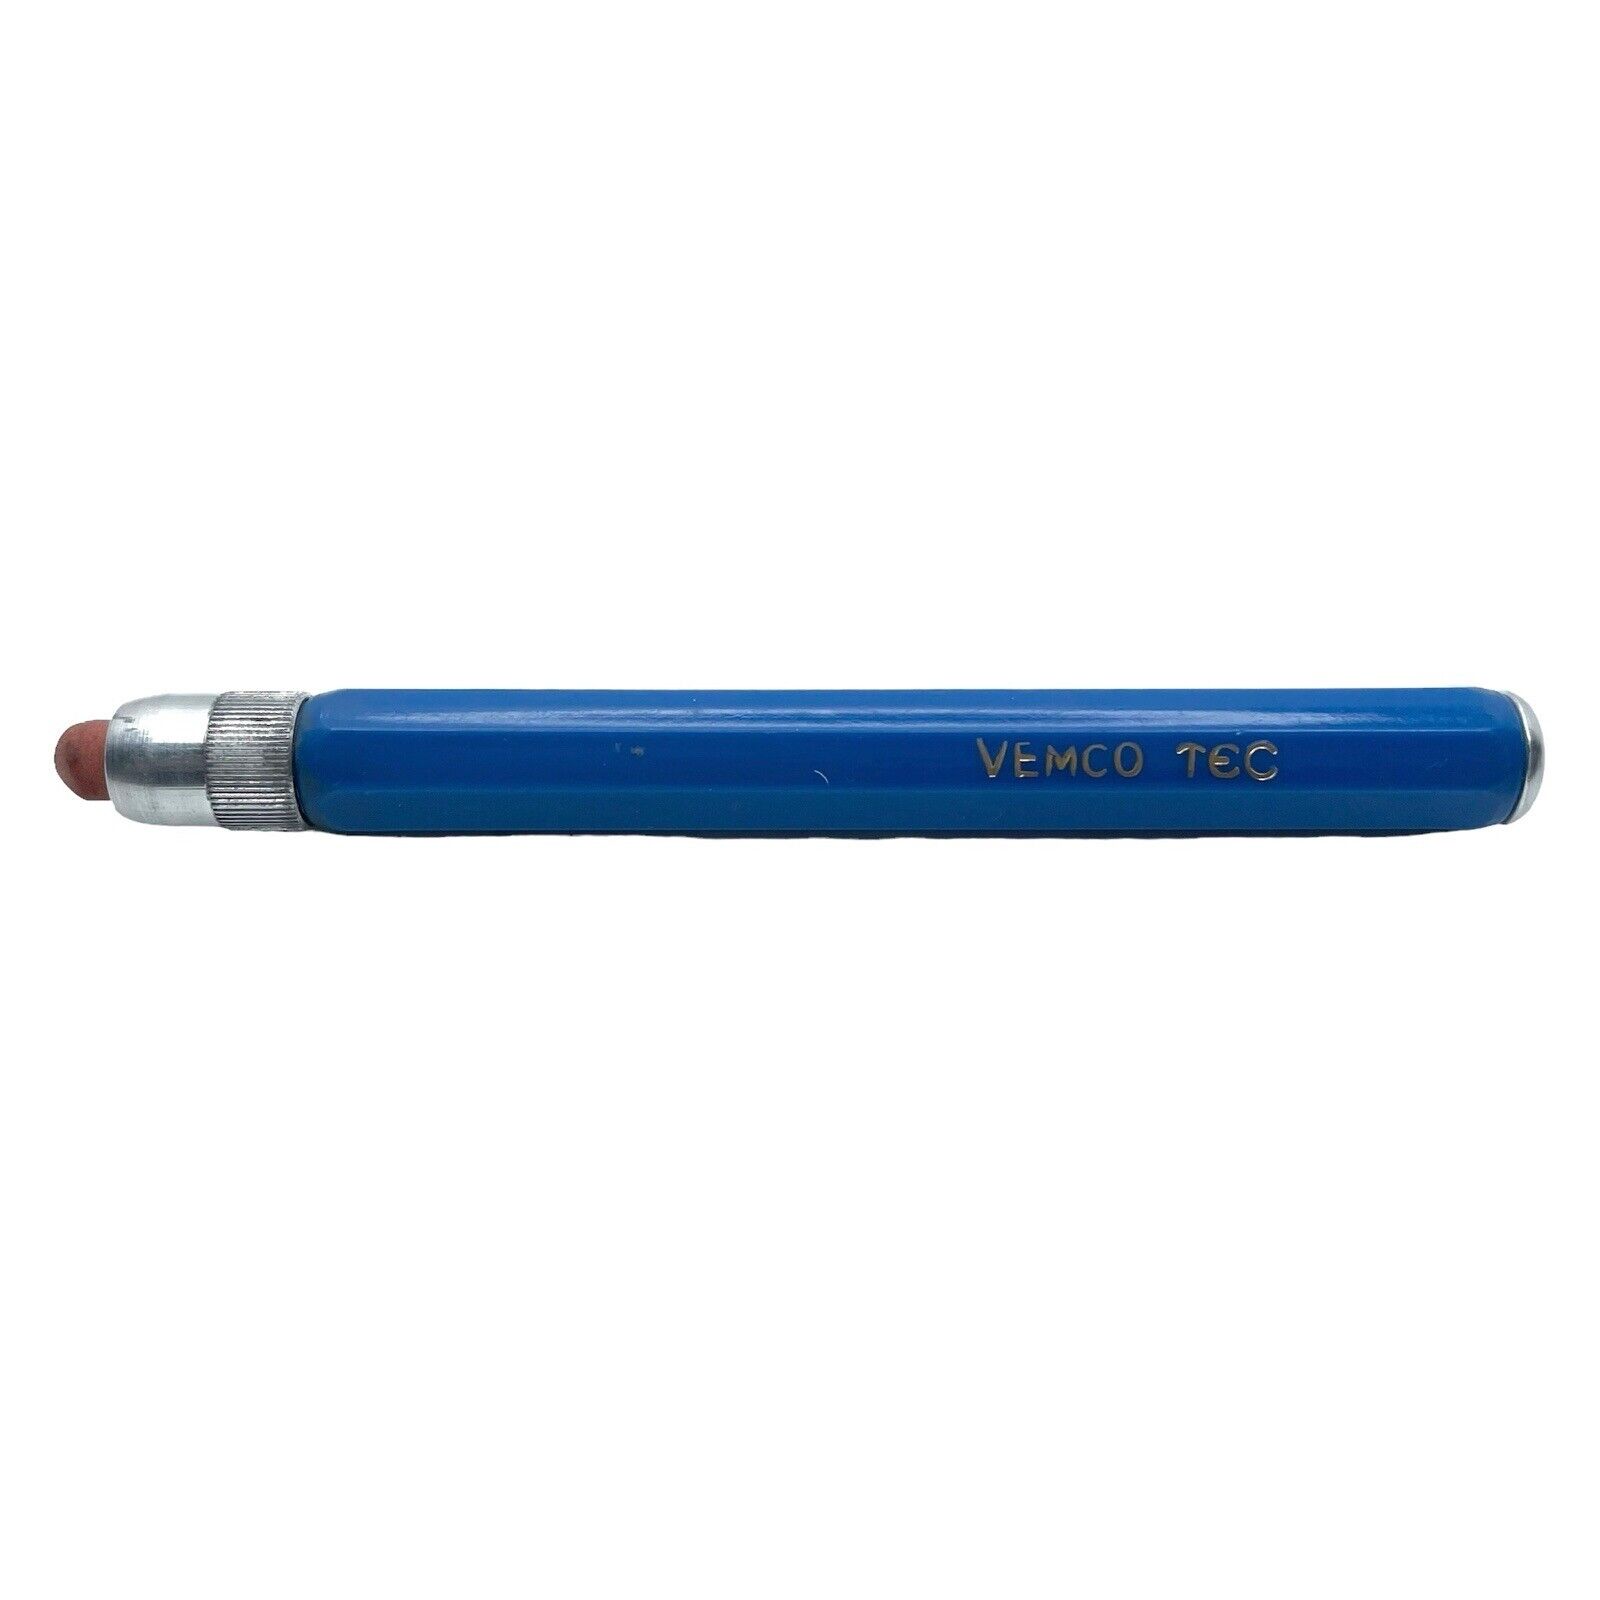 Vemco Tec Drafting Eraser - Blue Vintage 40’s Drafting Tool